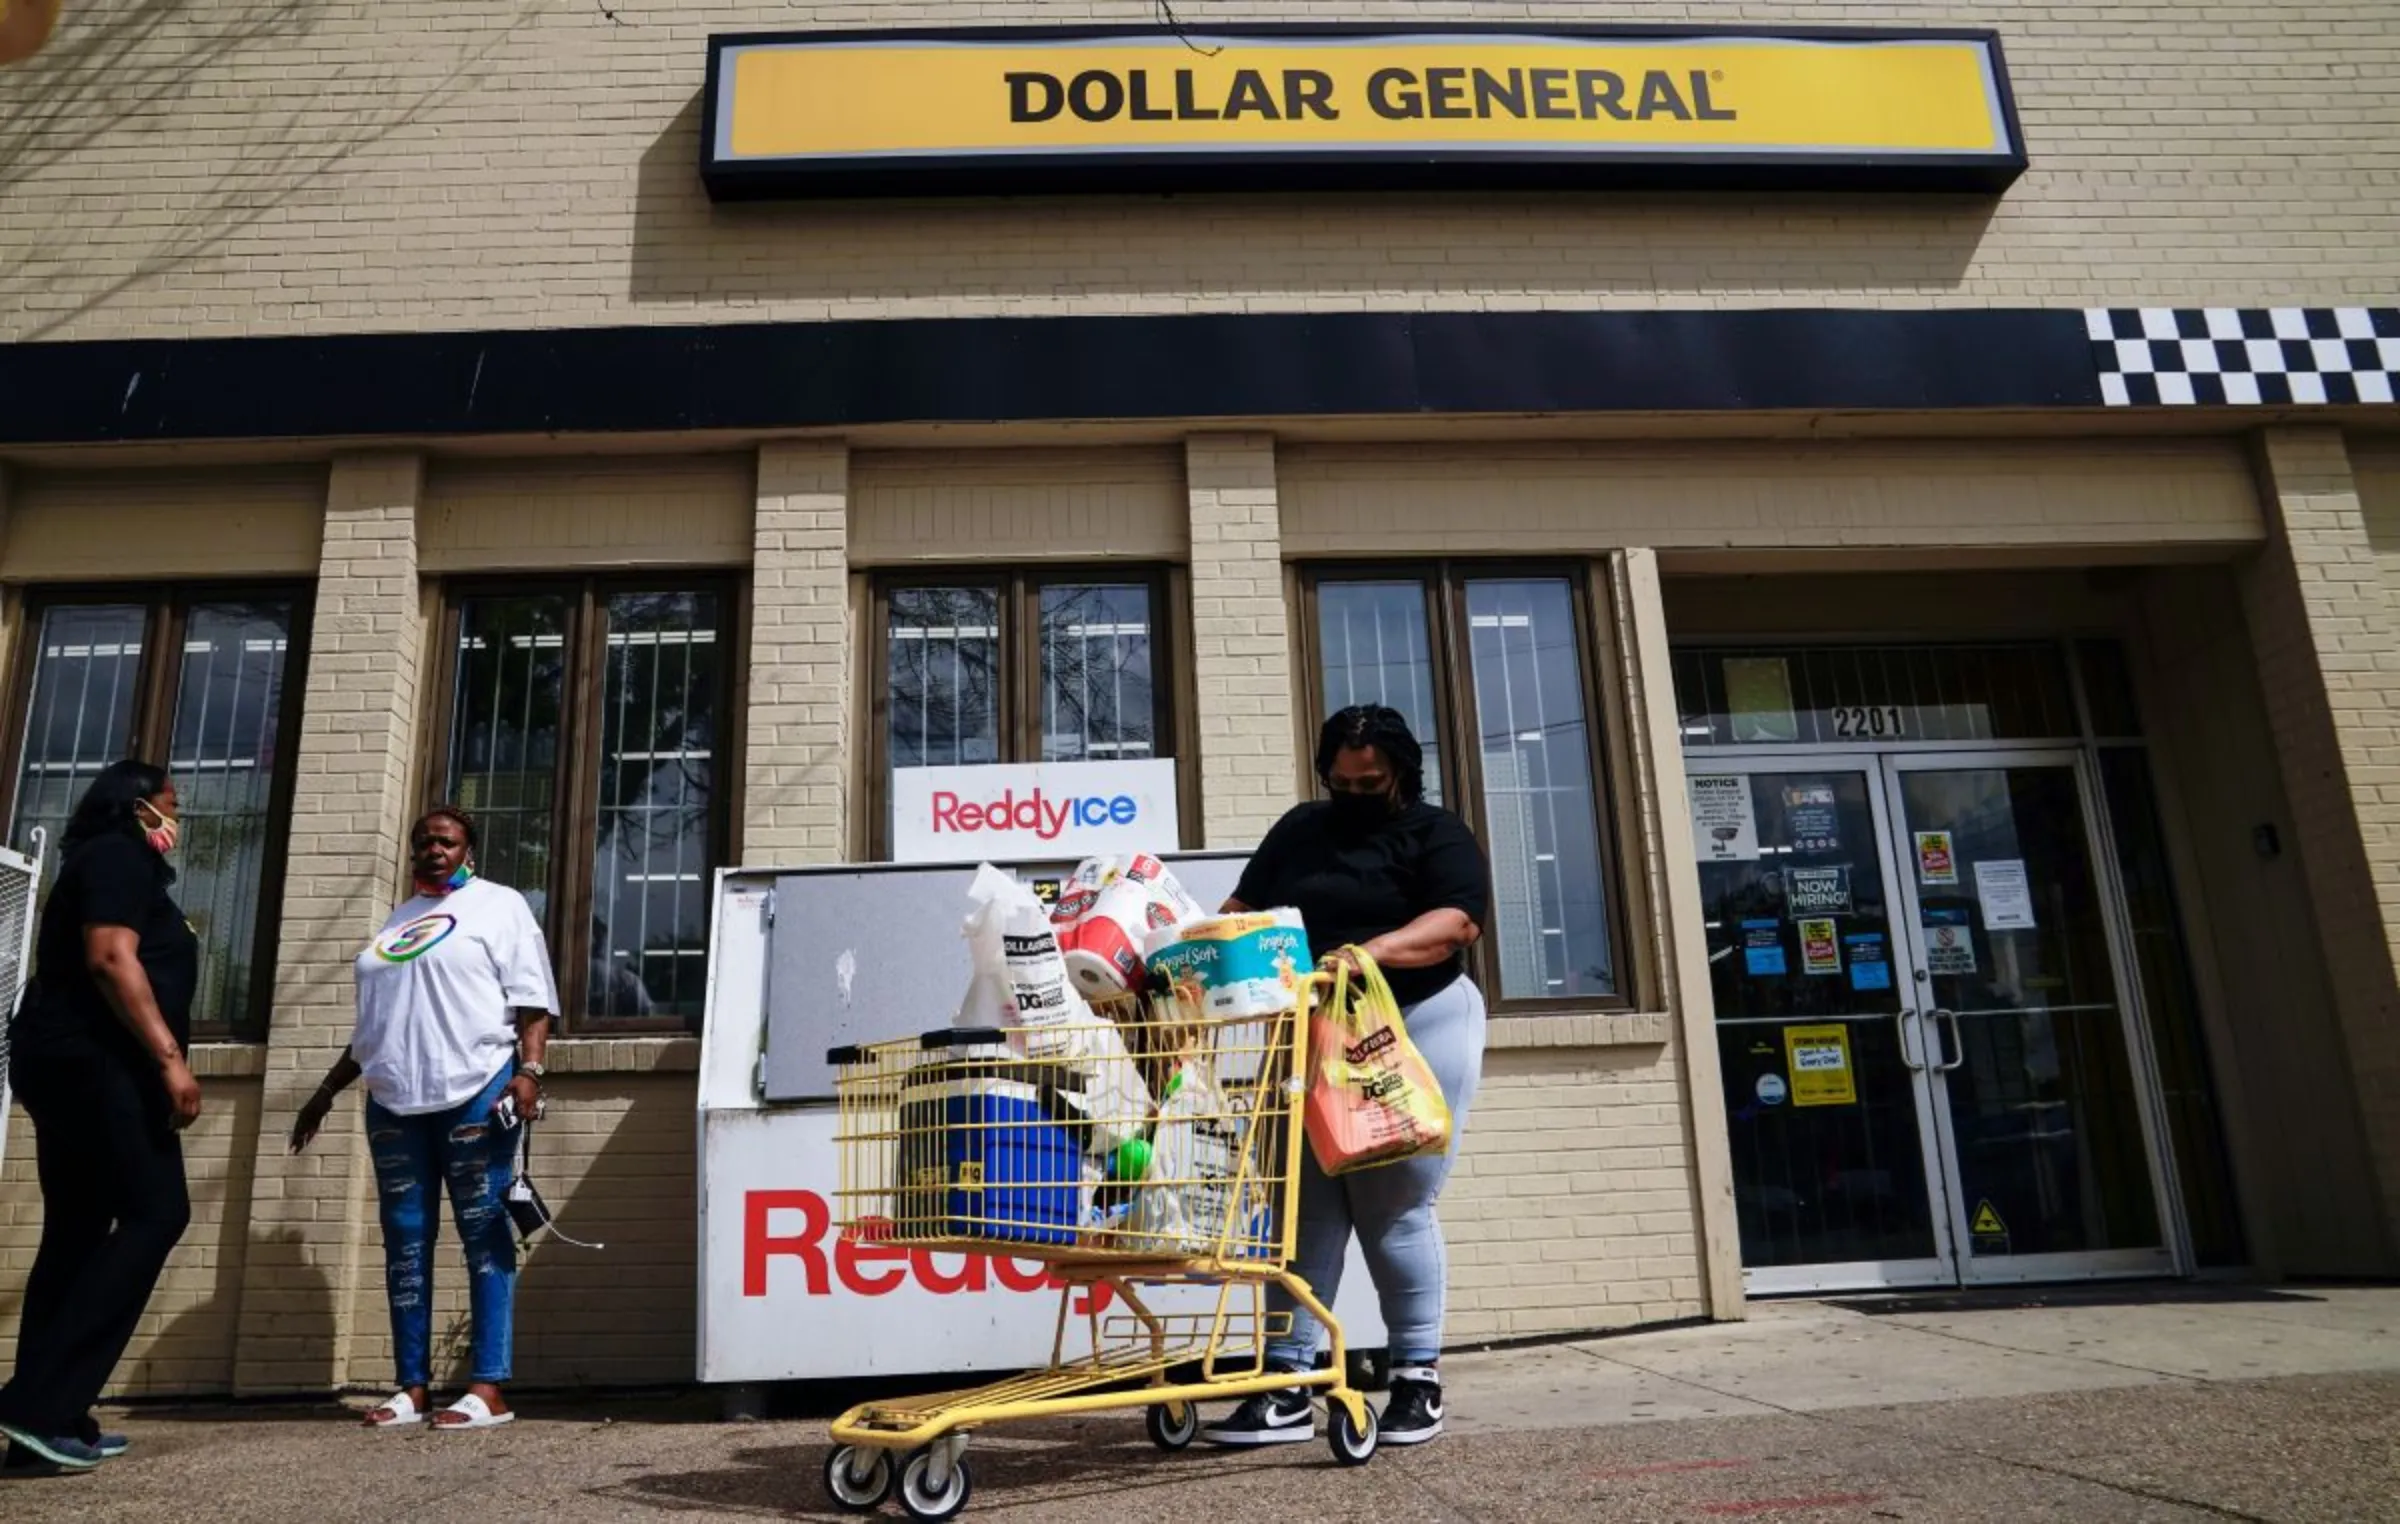 A person exits a Dollar General store in Mount Rainier, Maryland, U.S., June 1, 2021. REUTERS/Erin Scott